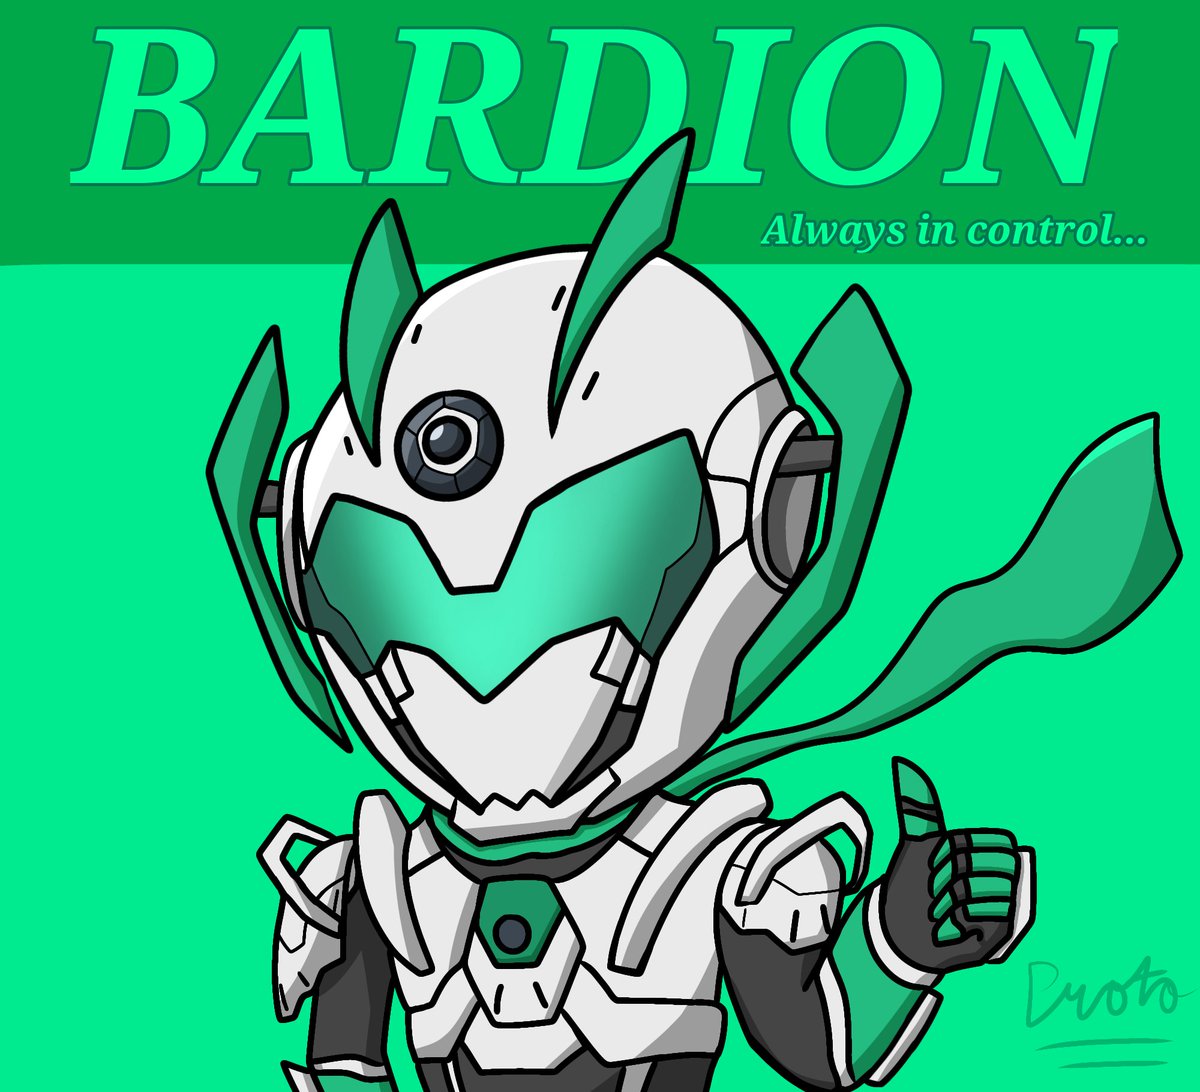 Some quick Bardion fanart for today! (Bardi's own Superhero thing, that's cool)
#Bardion #smartprotectorbardion #bardismarthome #tokusatsu #AlwaysinControl #fanart